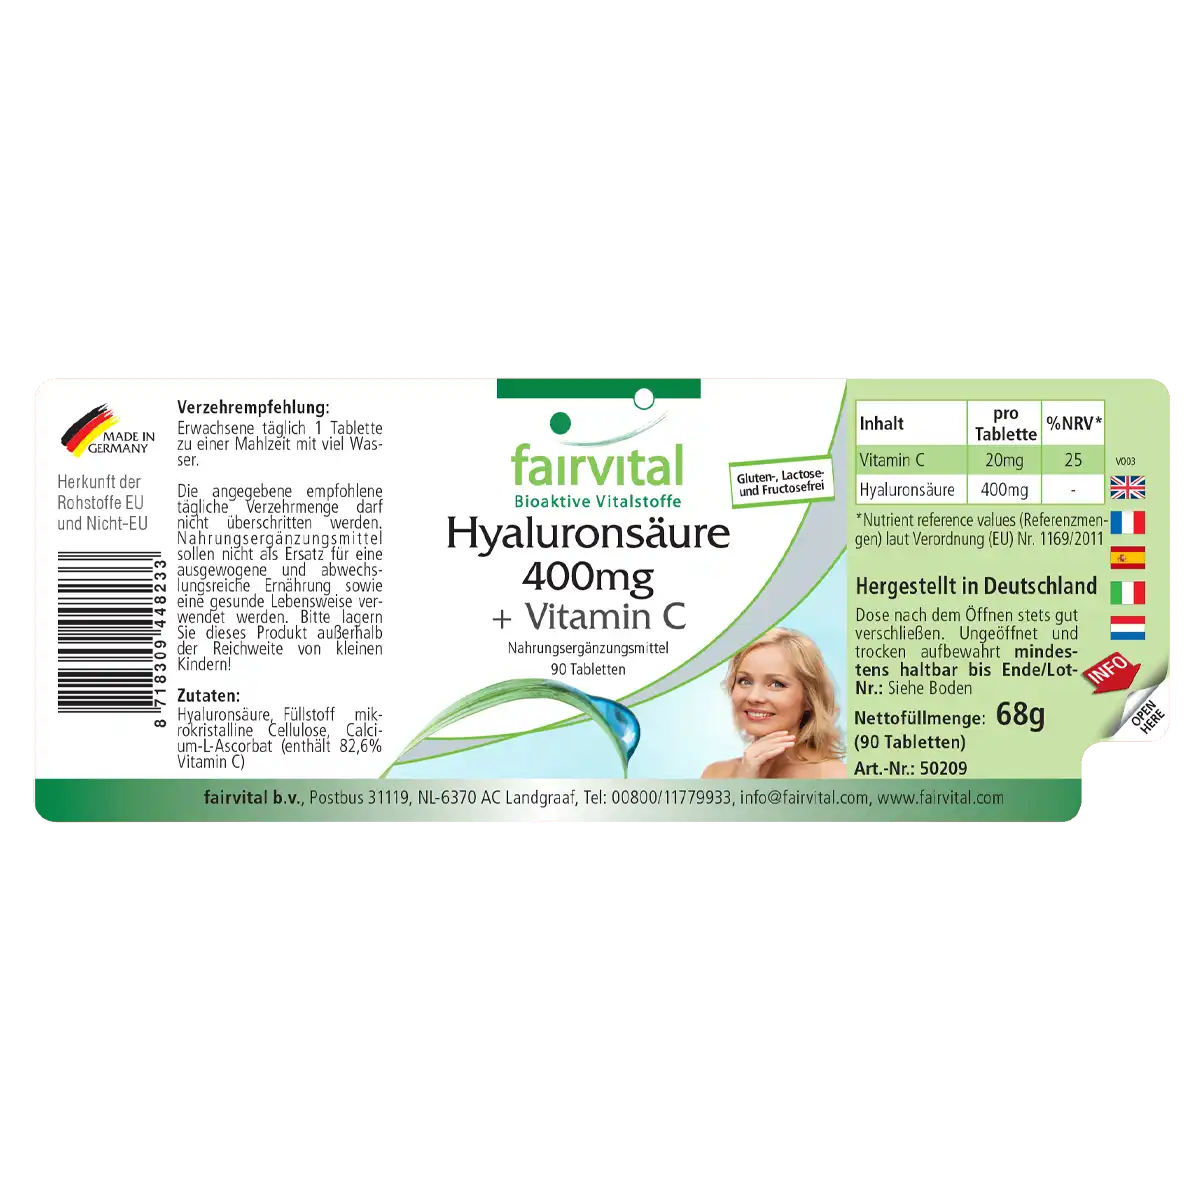 Hyaluronic acid 400mg + vitamin C - 90 tablets